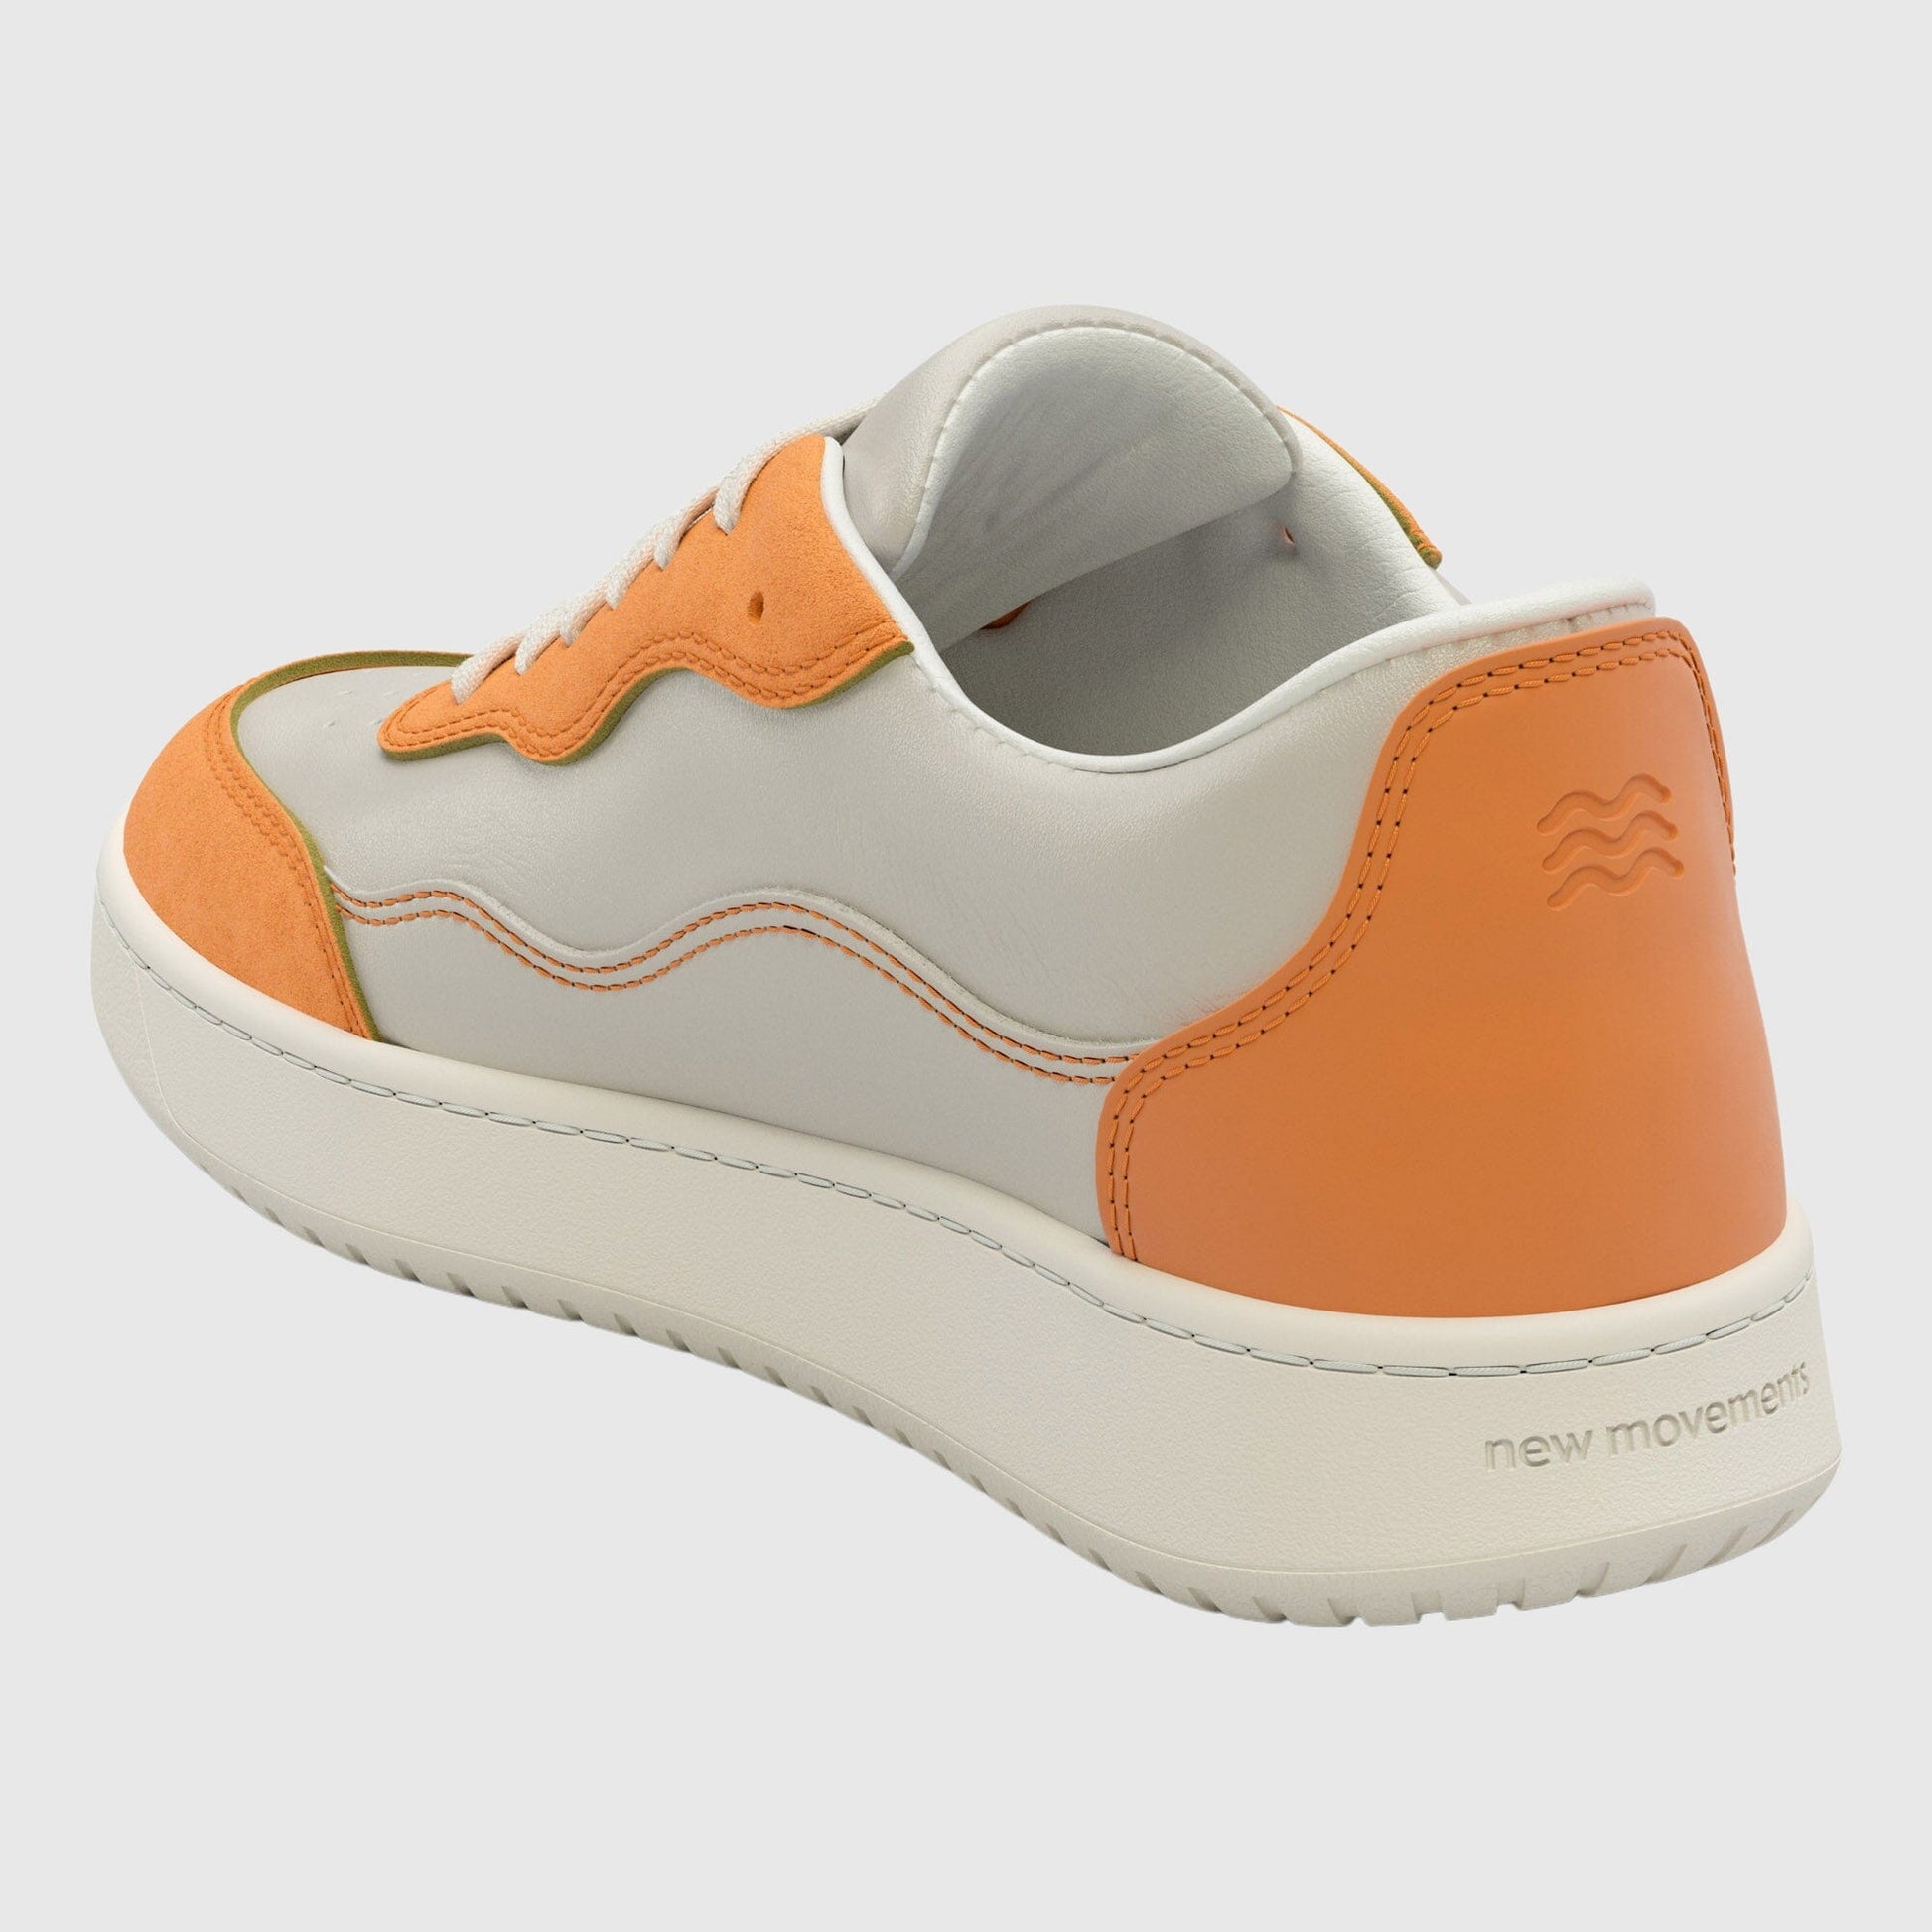 New Movements Allrounder S - Beige / Orange Sneakers New Movements 